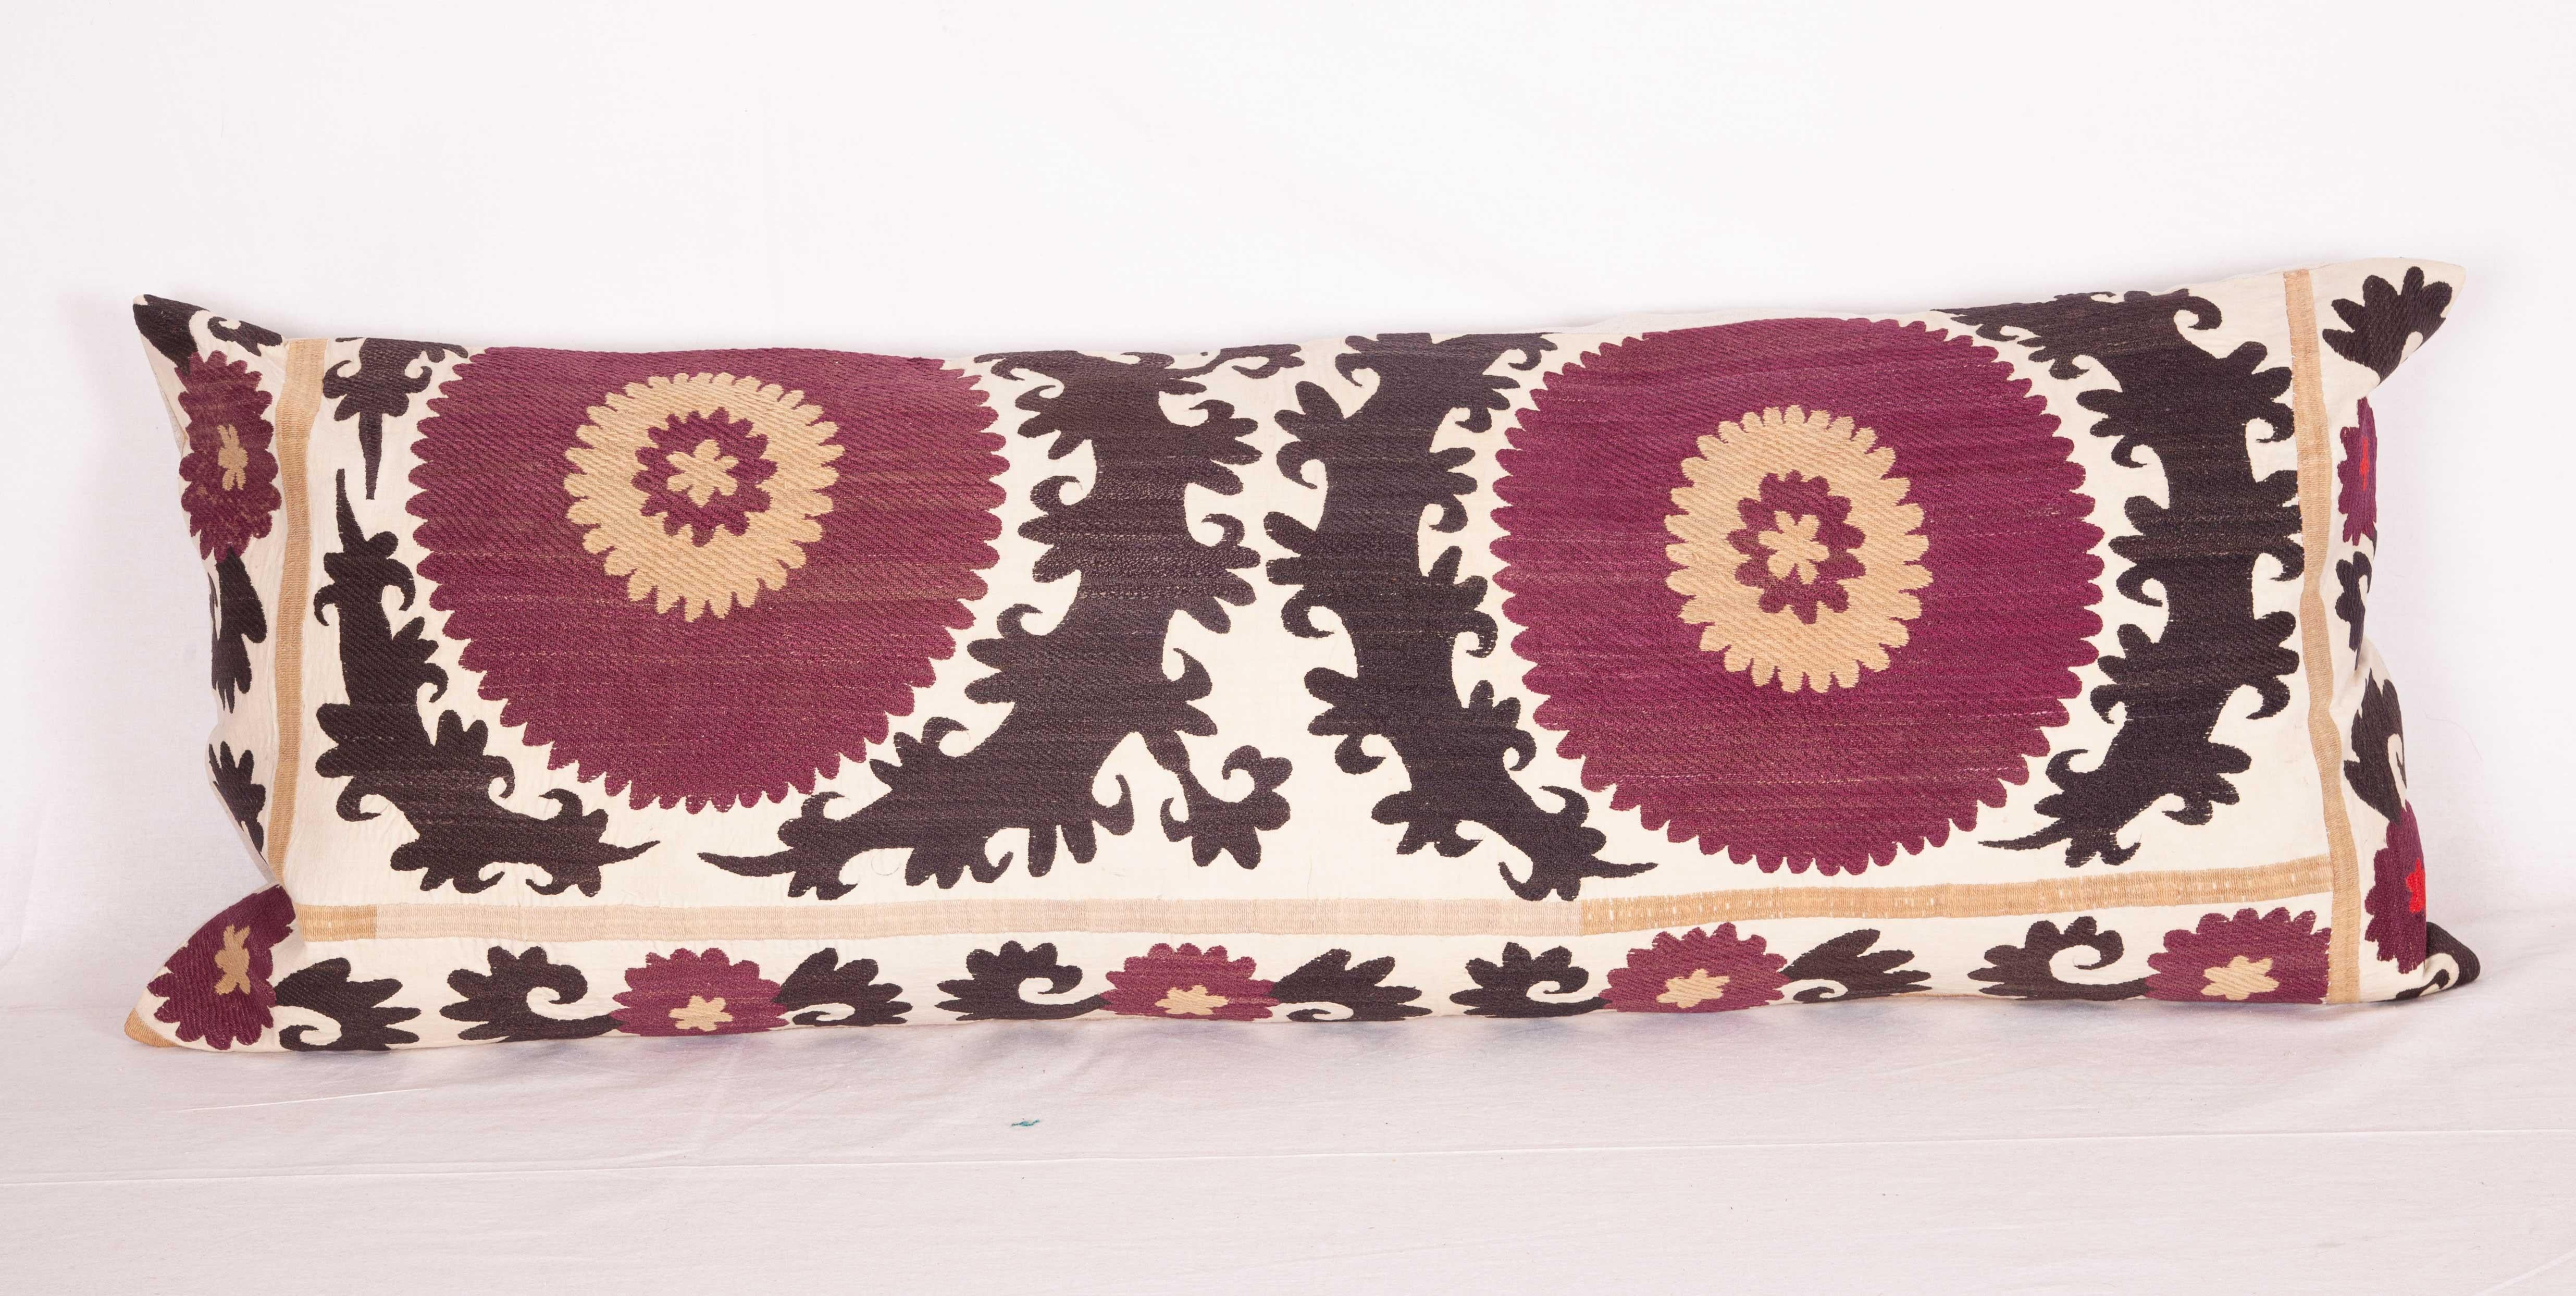 Uzbek Suzani Lumbar Pillow Cases Made from an Early 20th Century Samarkand Suzani